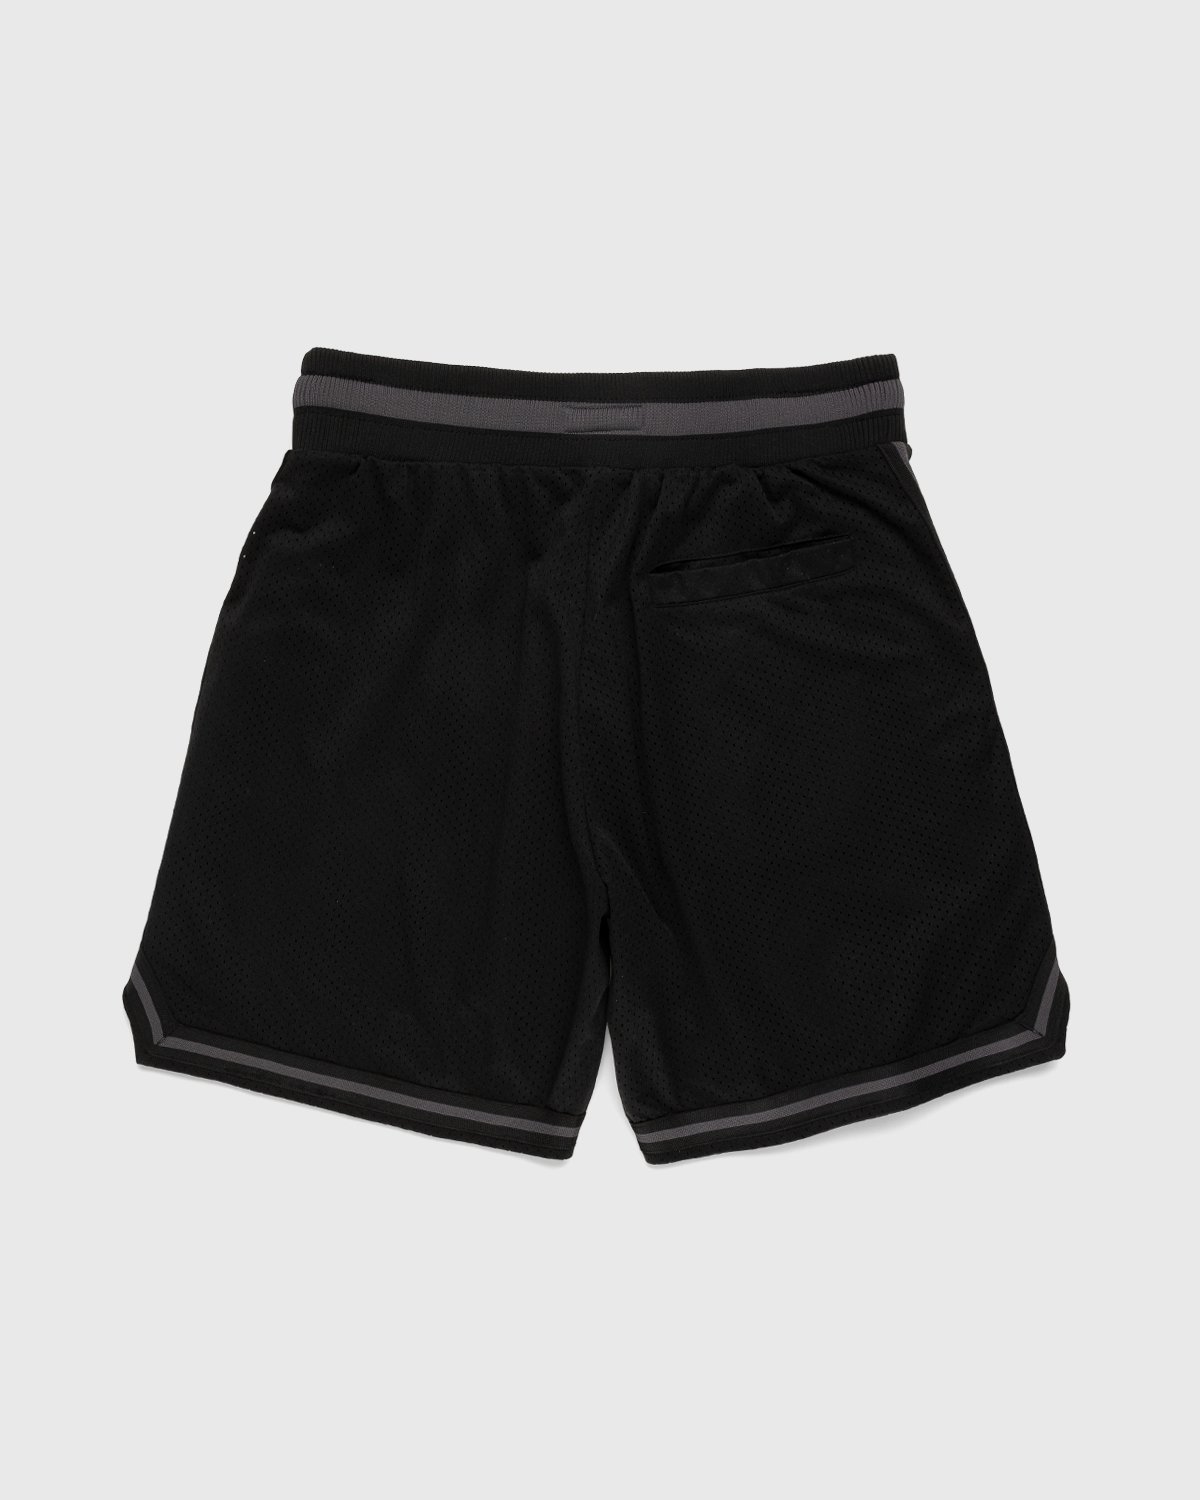 Market x UCLA x Highsnobiety - HS Sports Mesh Bruin Shorts Black - Clothing - Black - Image 2